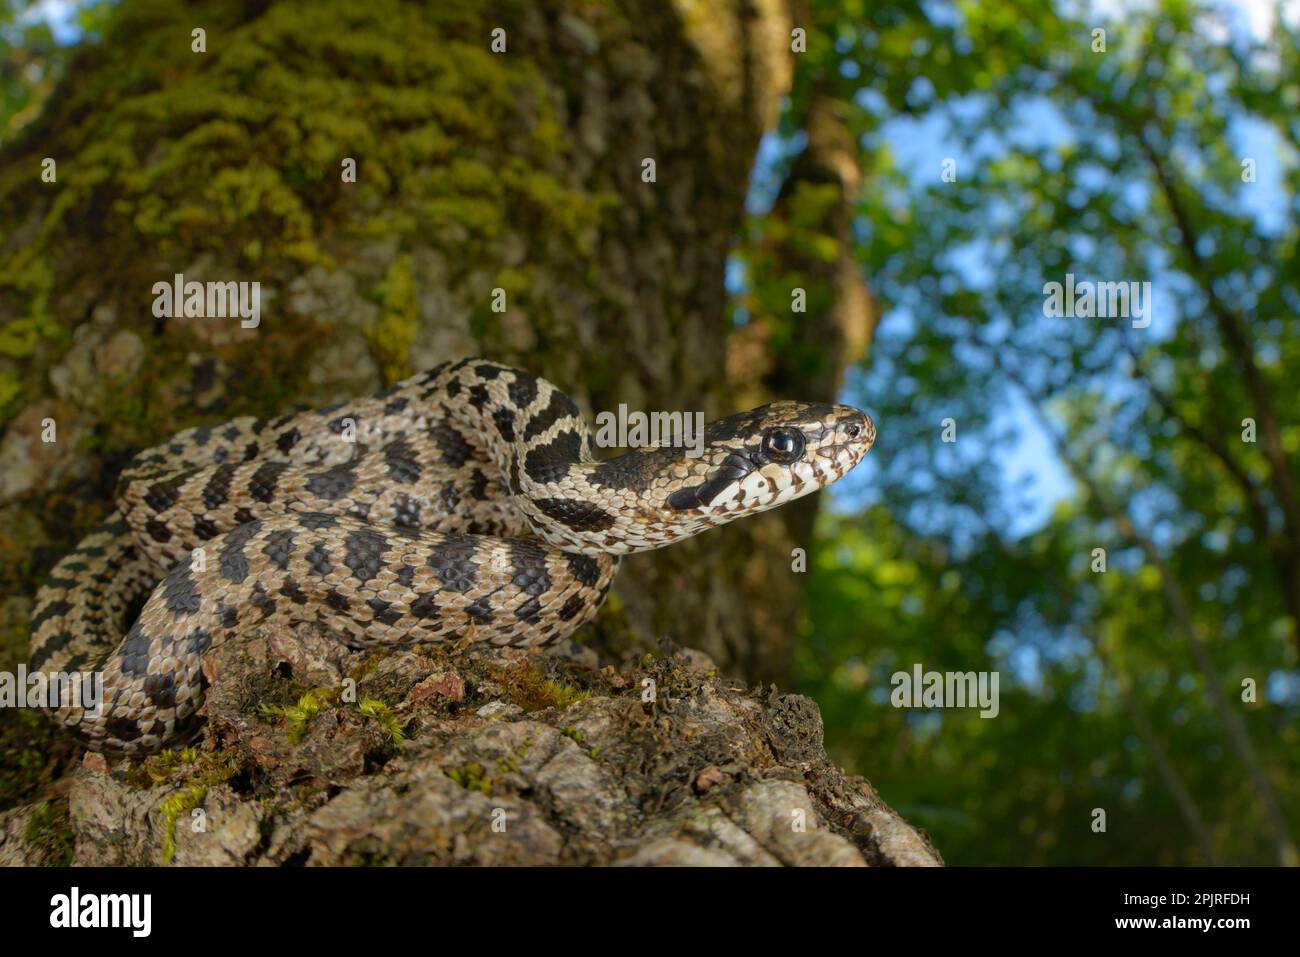 Four-lined Snake (Elaphe quatuorlineata) young, coiled on Downy Oak (Quercus pubescens) trunk, Croatia Stock Photo